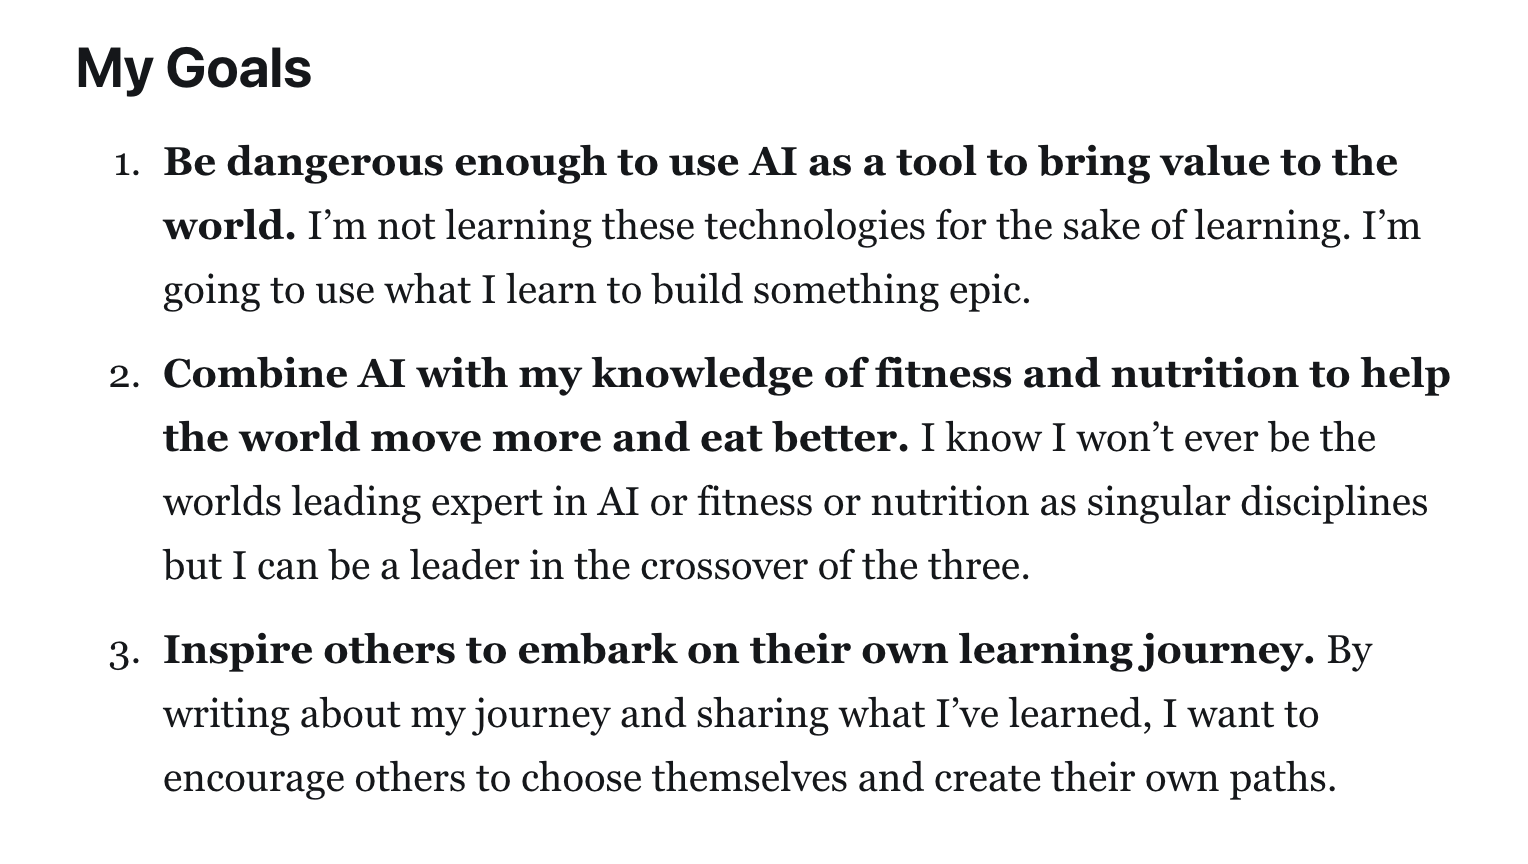 Daniel Bourke's goals for his self-created AI Masters Degree